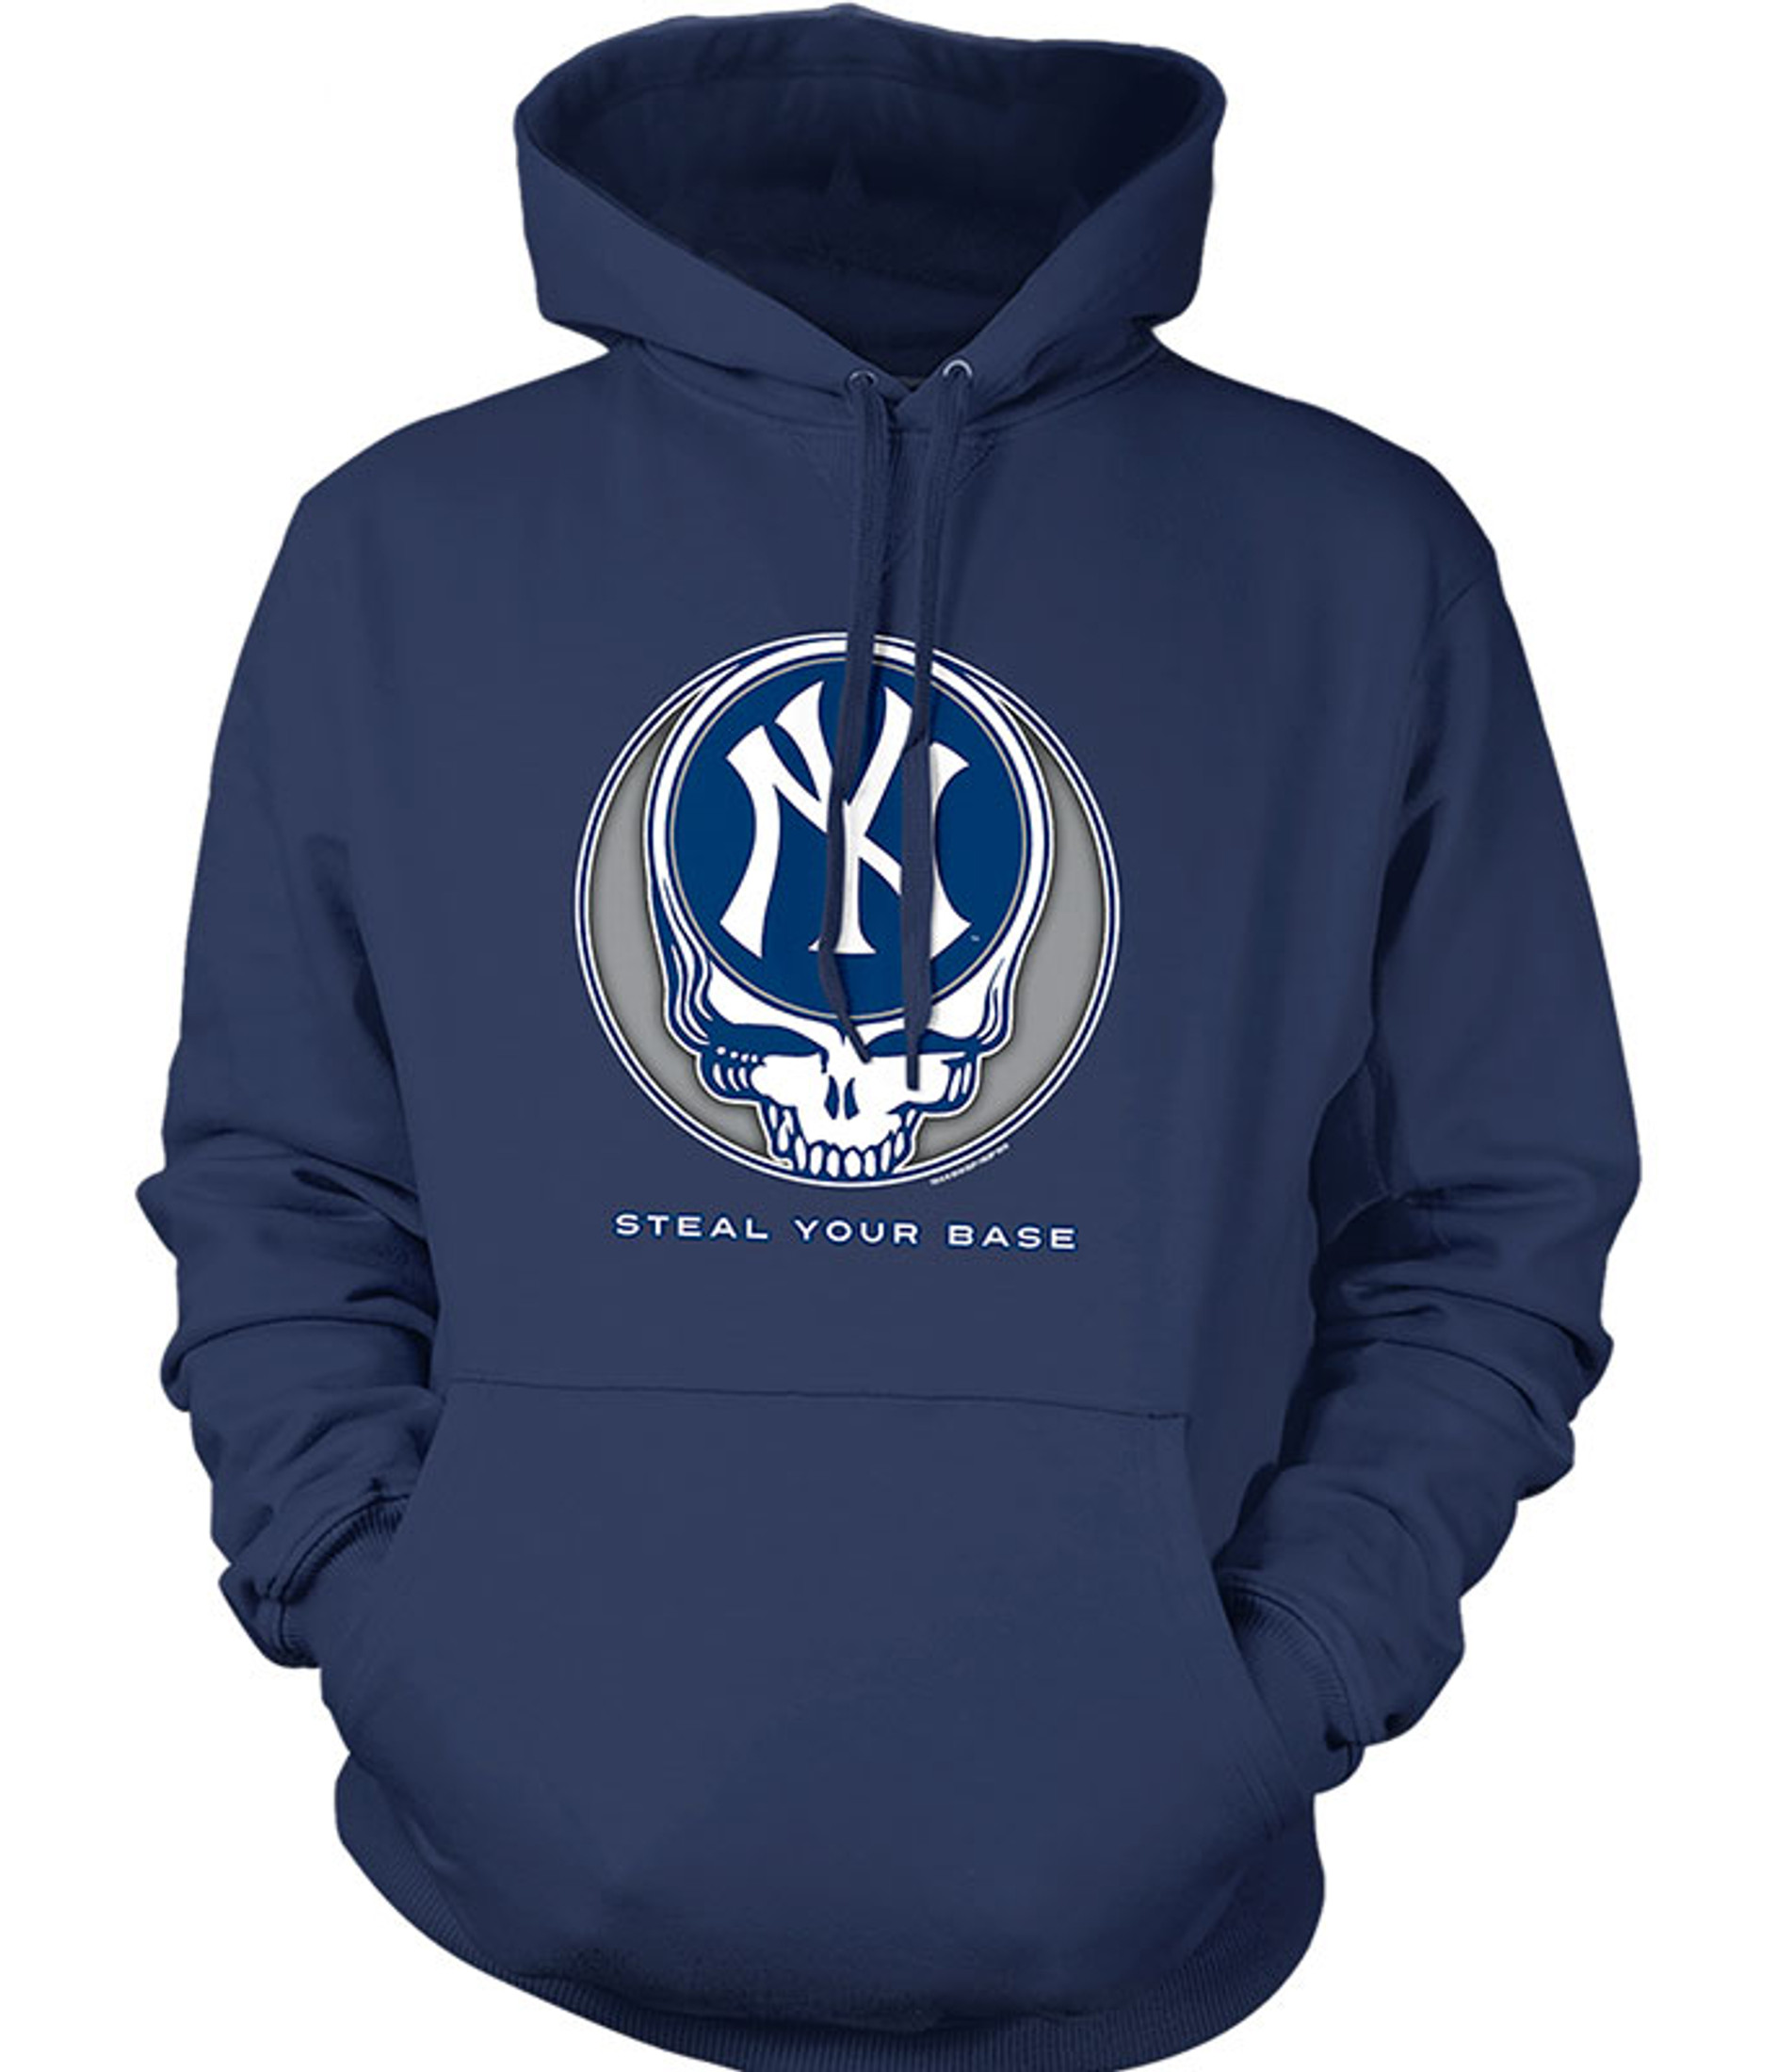 MLB New York Yankees Steal Your Base Navy Hoodie